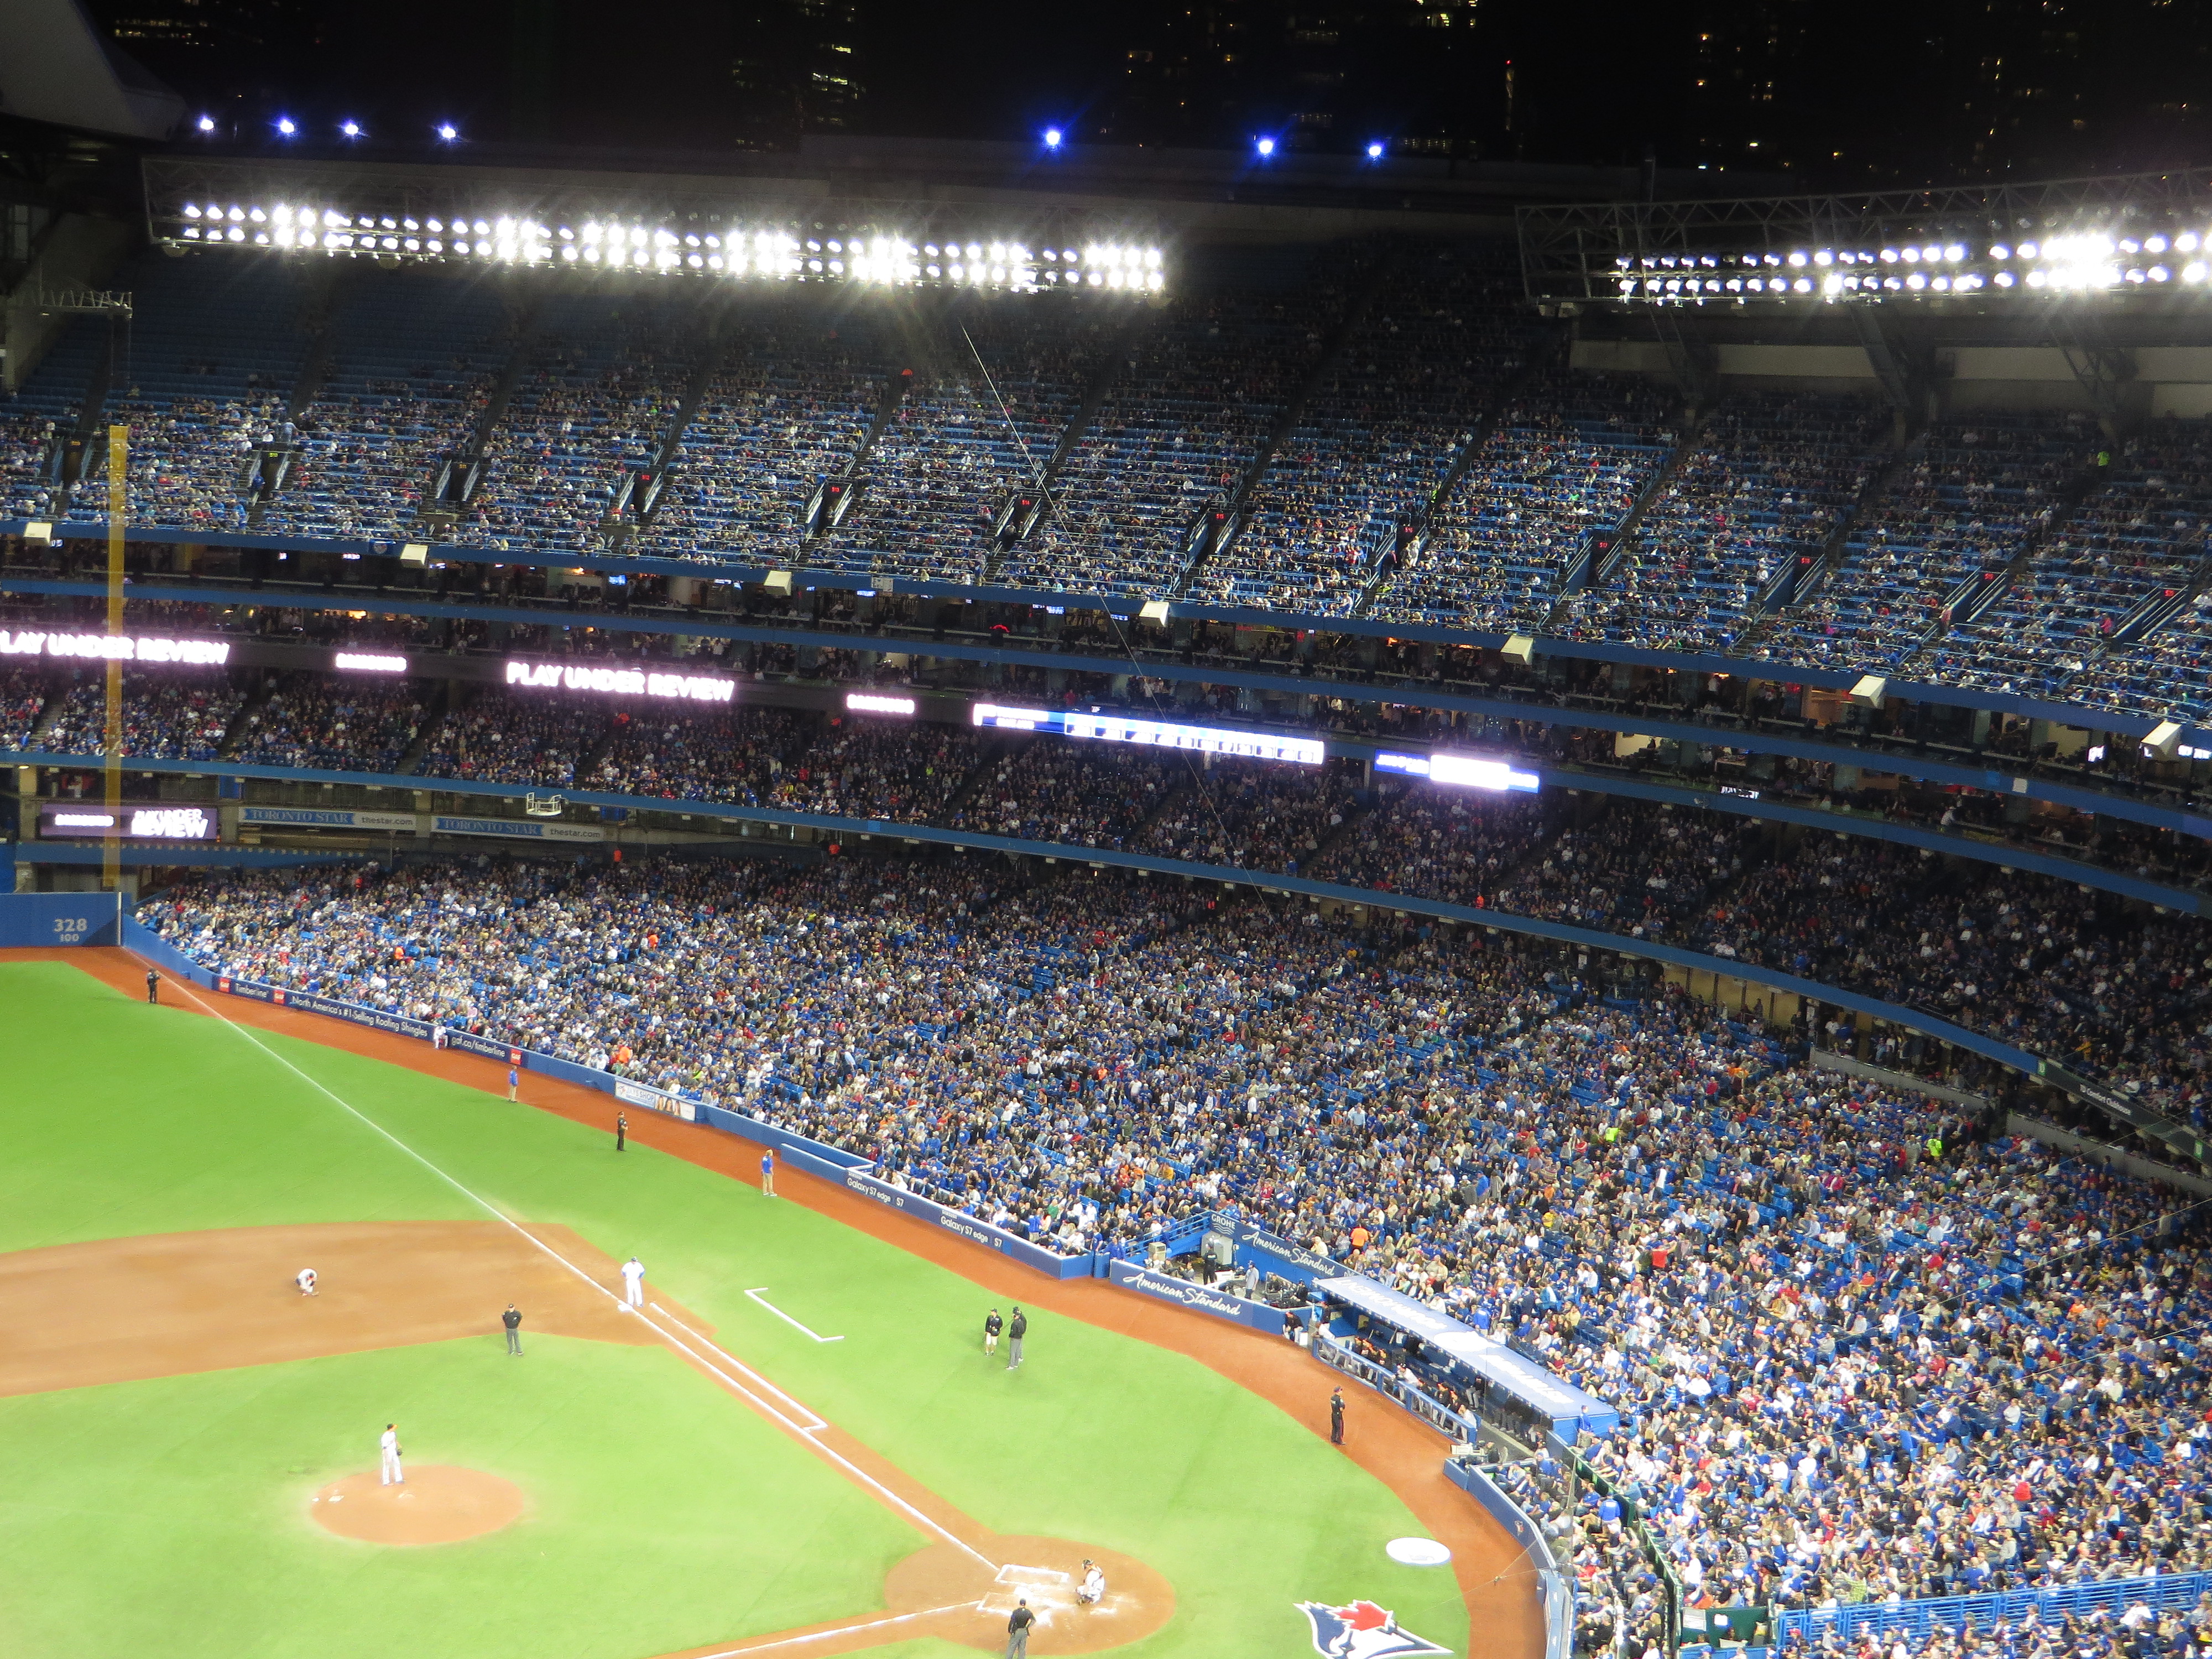 File:Toronto Blue Jays 5, Baltimore Orioles 1, Rogers Centre, Toronto,  Ontario (29901717511).jpg - Wikimedia Commons